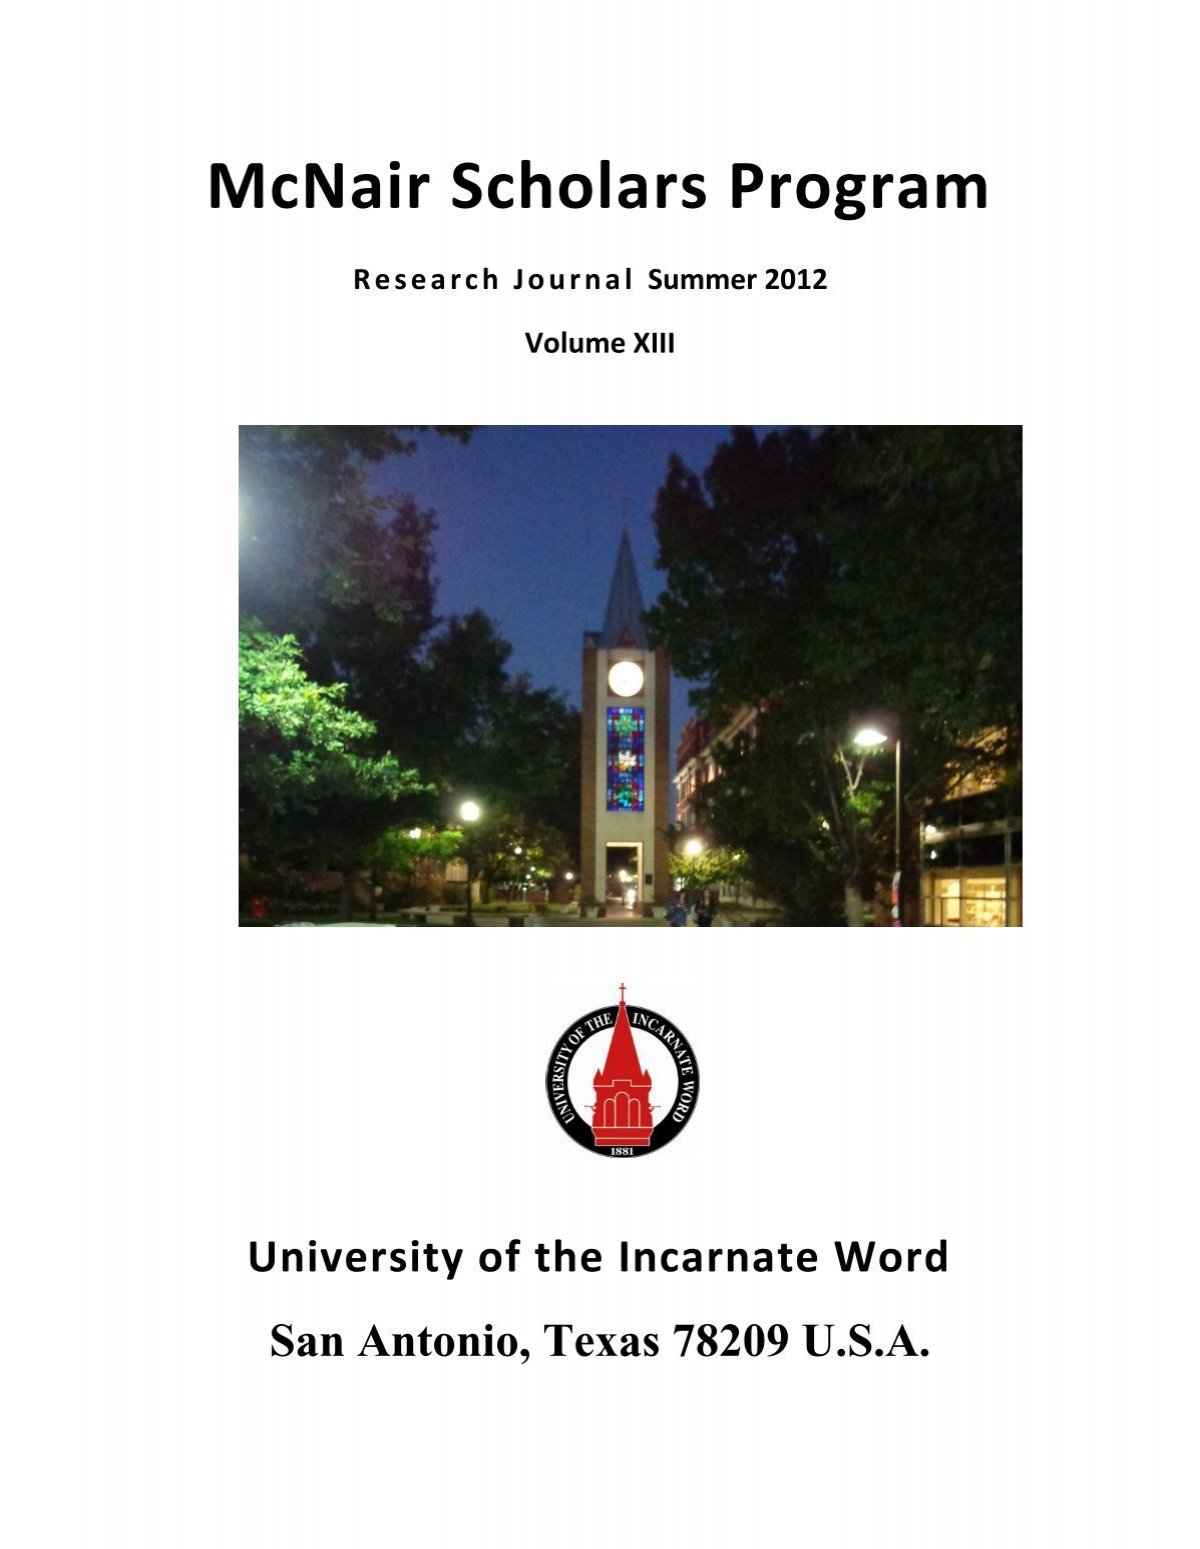 McNair Scholars Program - University of the Incarnate Word